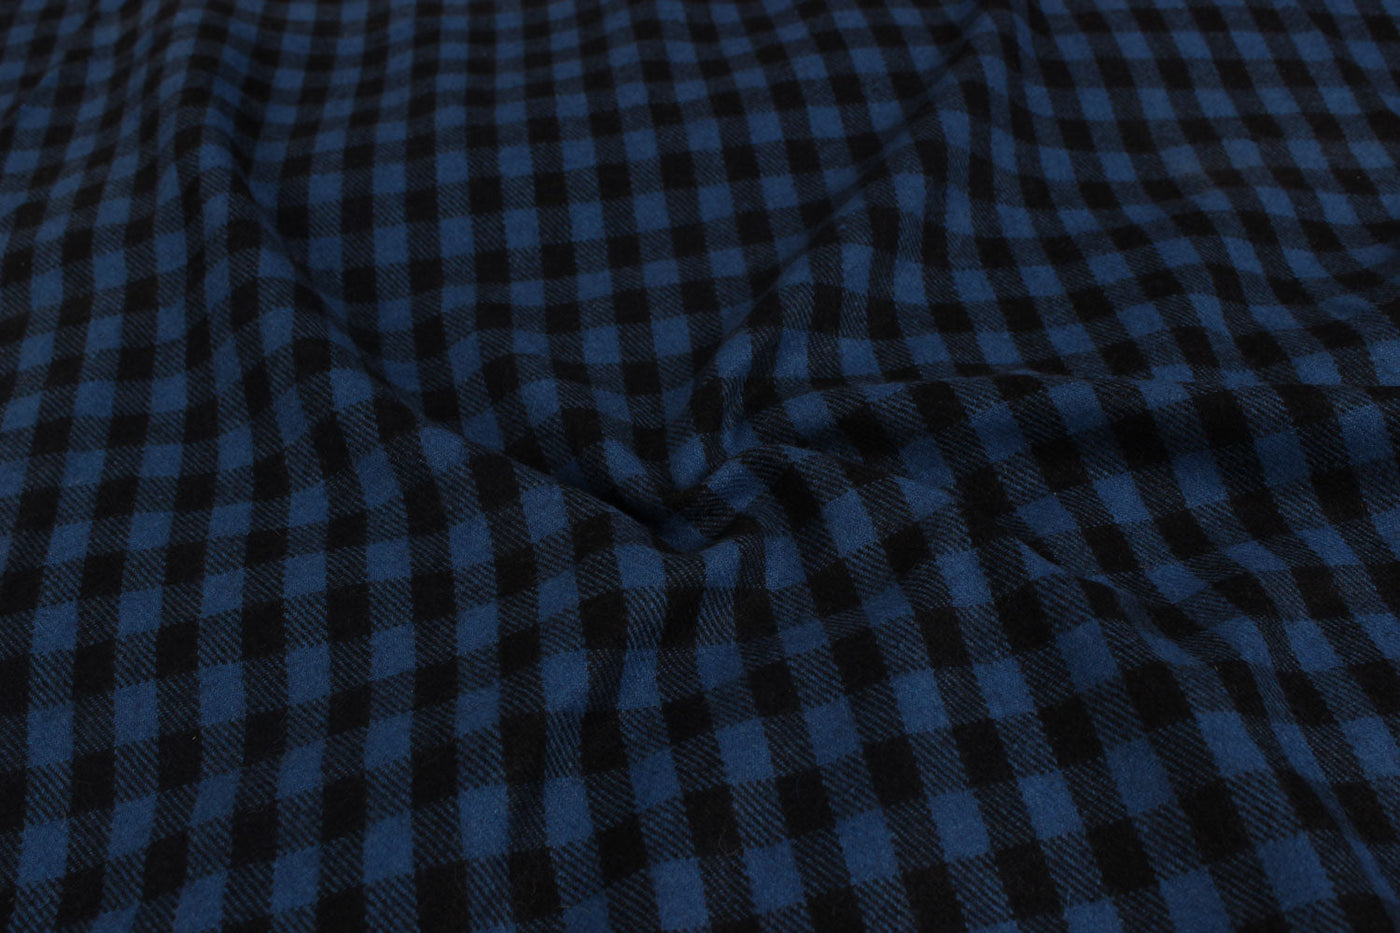 Blue and Black Tweed Fabric1